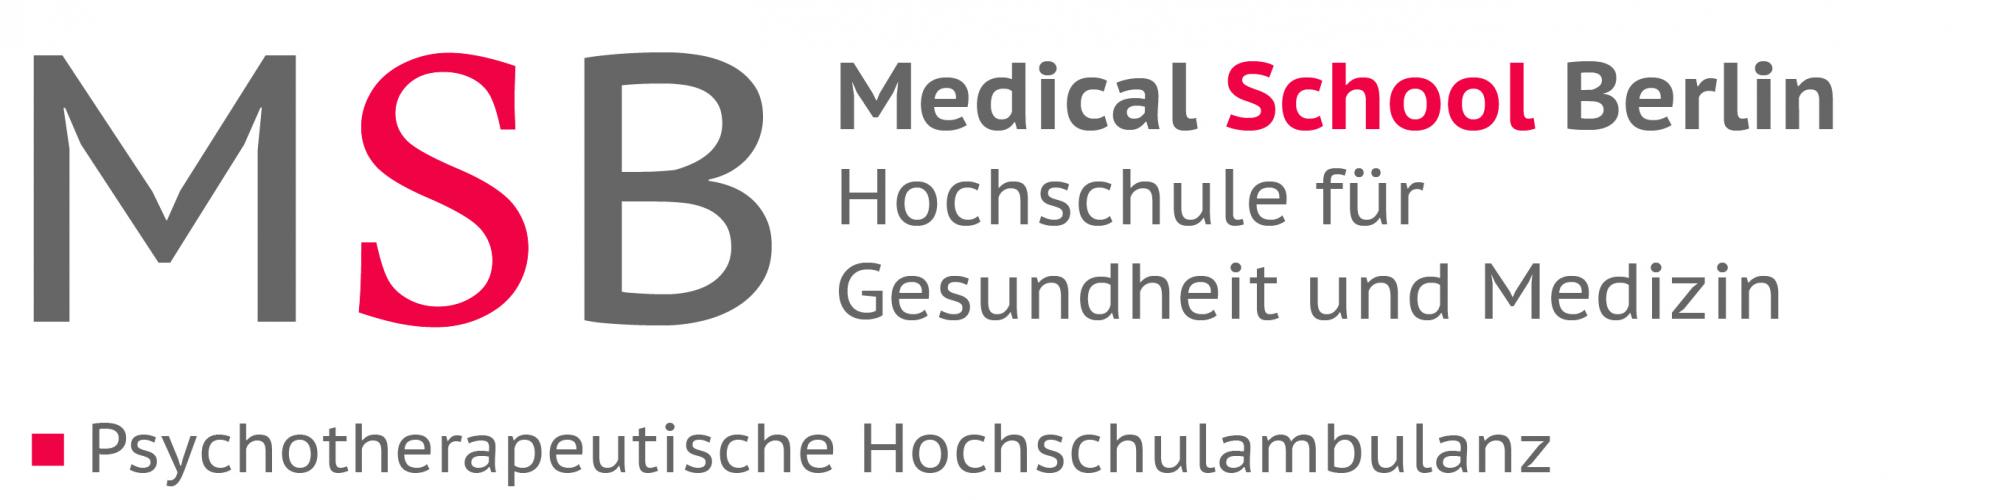 Medical School Berlin - Psychotherapeutische Hochschulambulanz